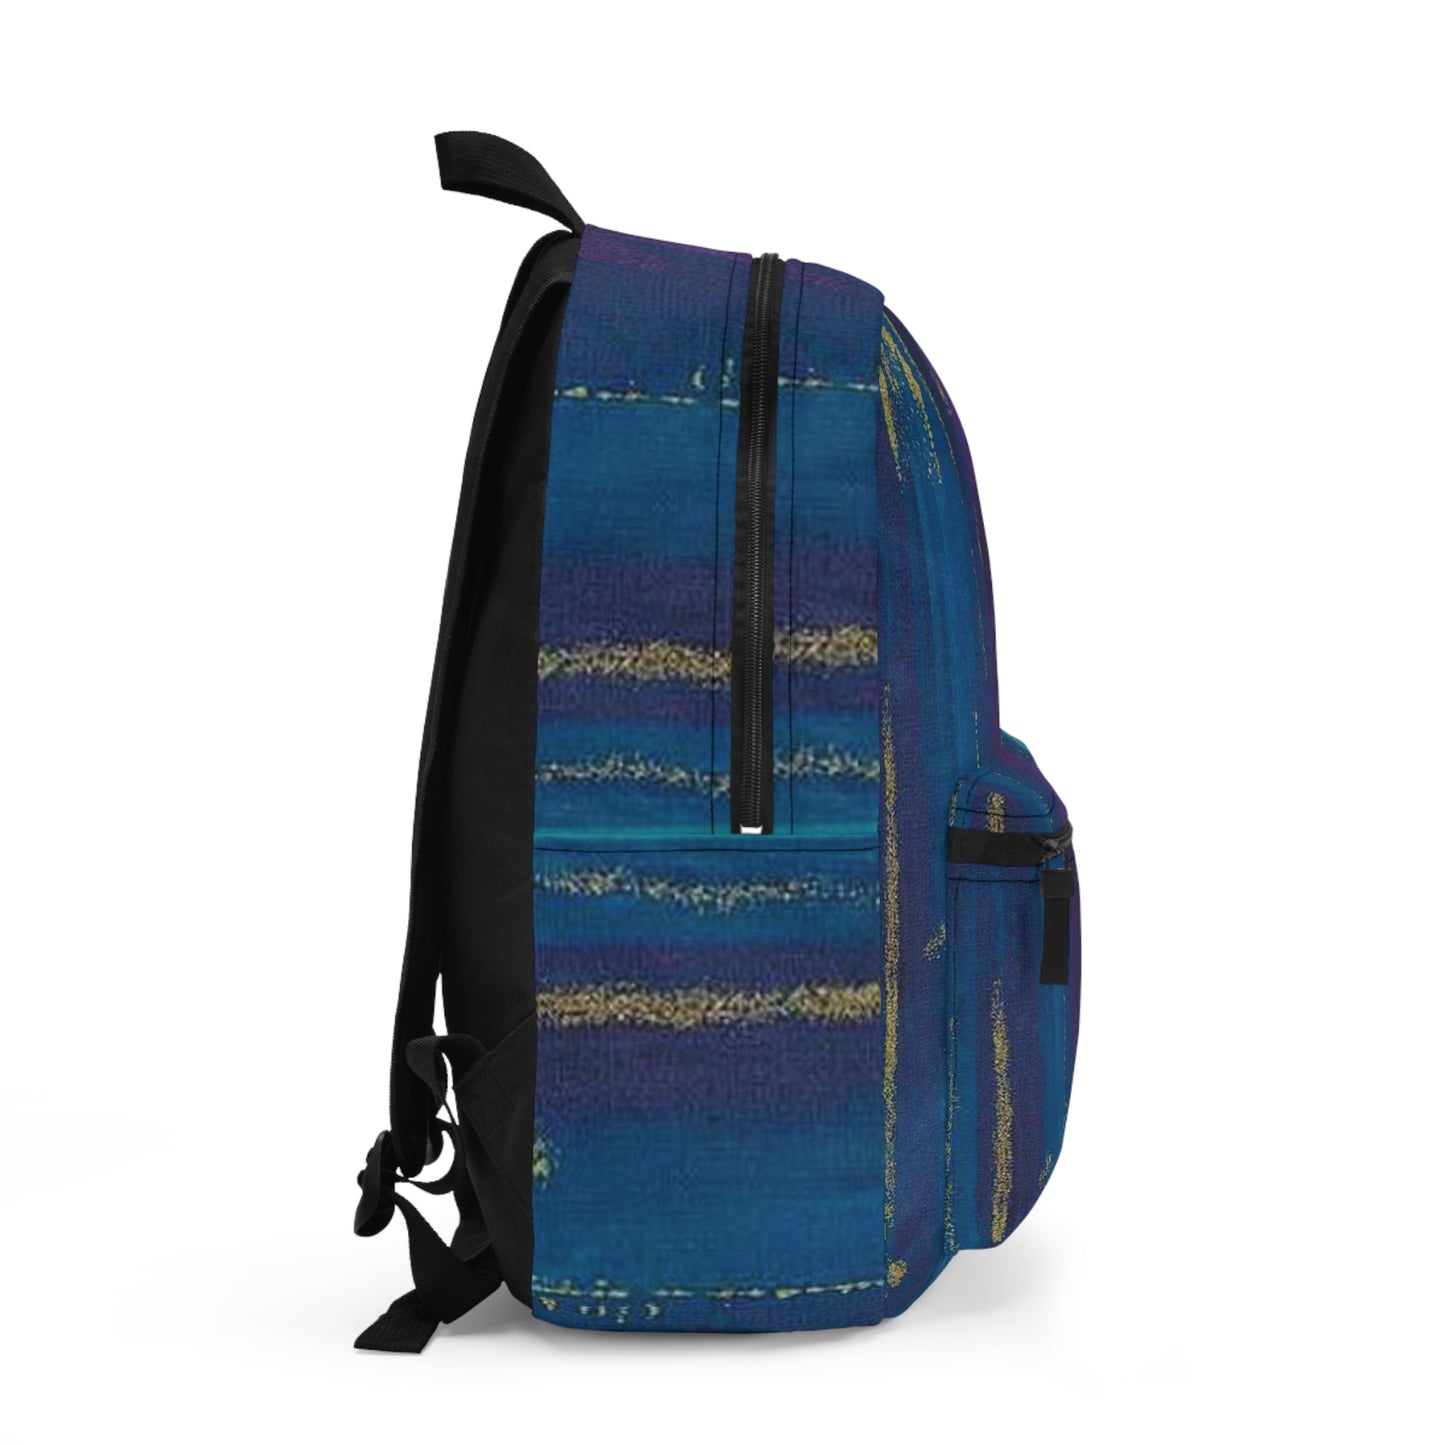 Peacock Inspired Backpack